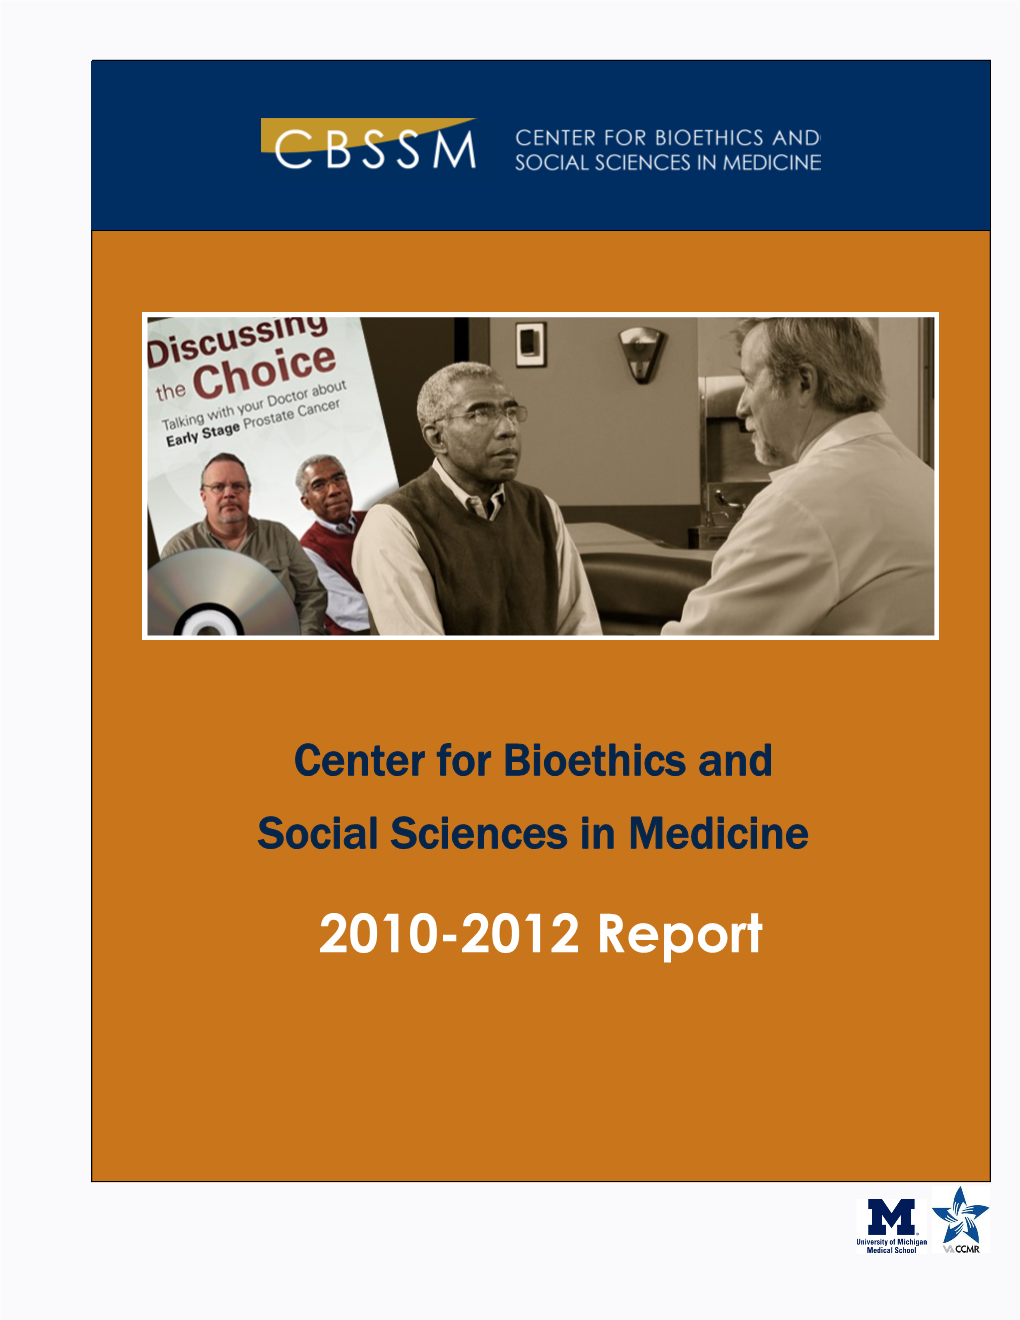 2010-2012 Report